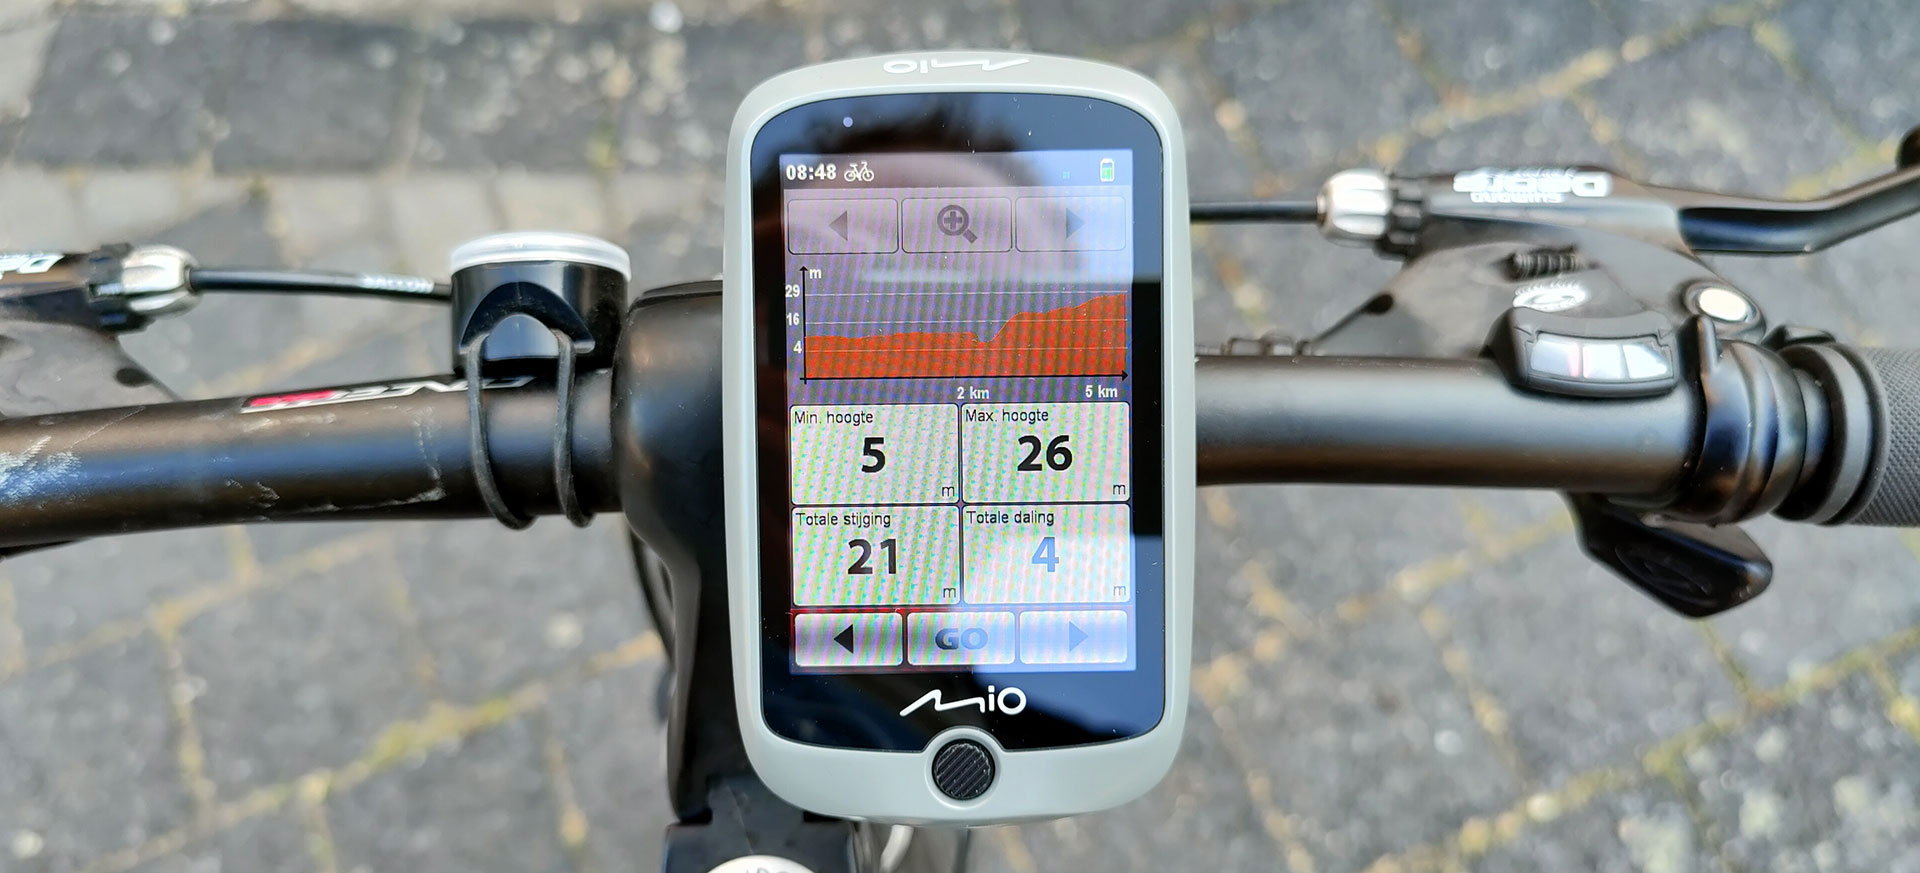 Ontaarden Vertrek Harde ring Review: Mio Cyclo Discover GPS Tour Computer - GadgetGear.nl